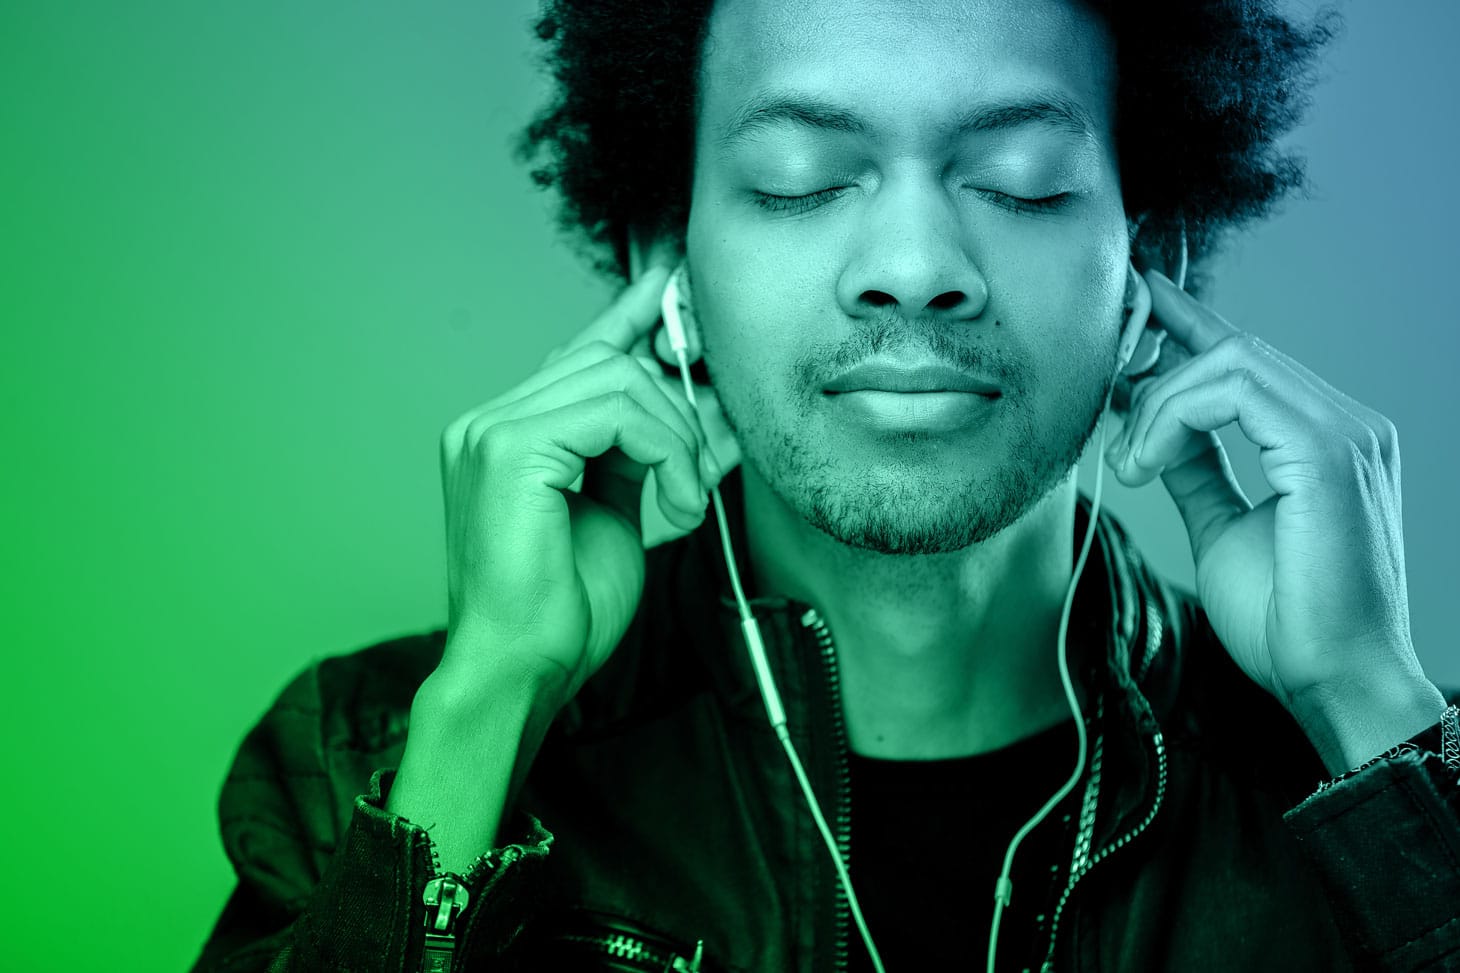 Man listening to music through earphones